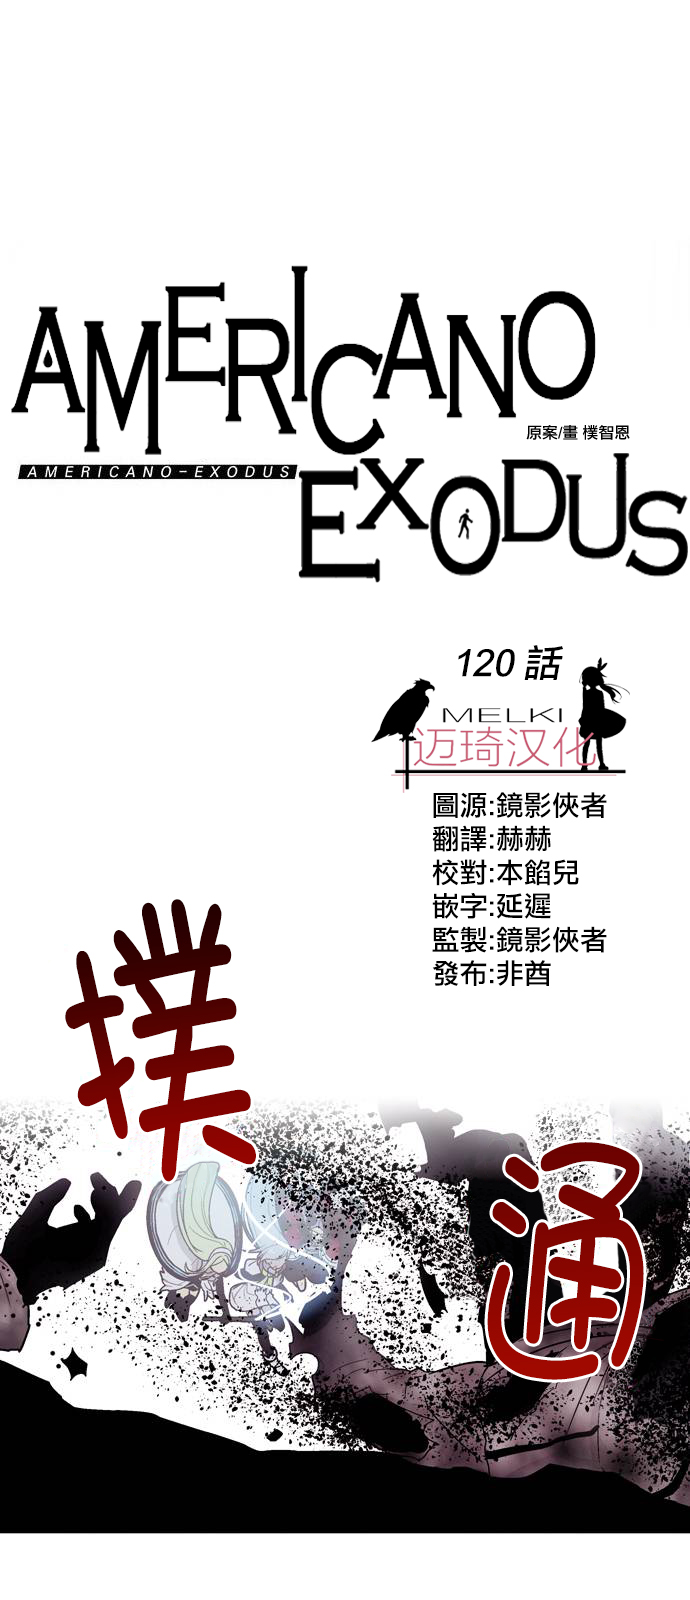 《Americano-exodus》漫画 exodus 120集